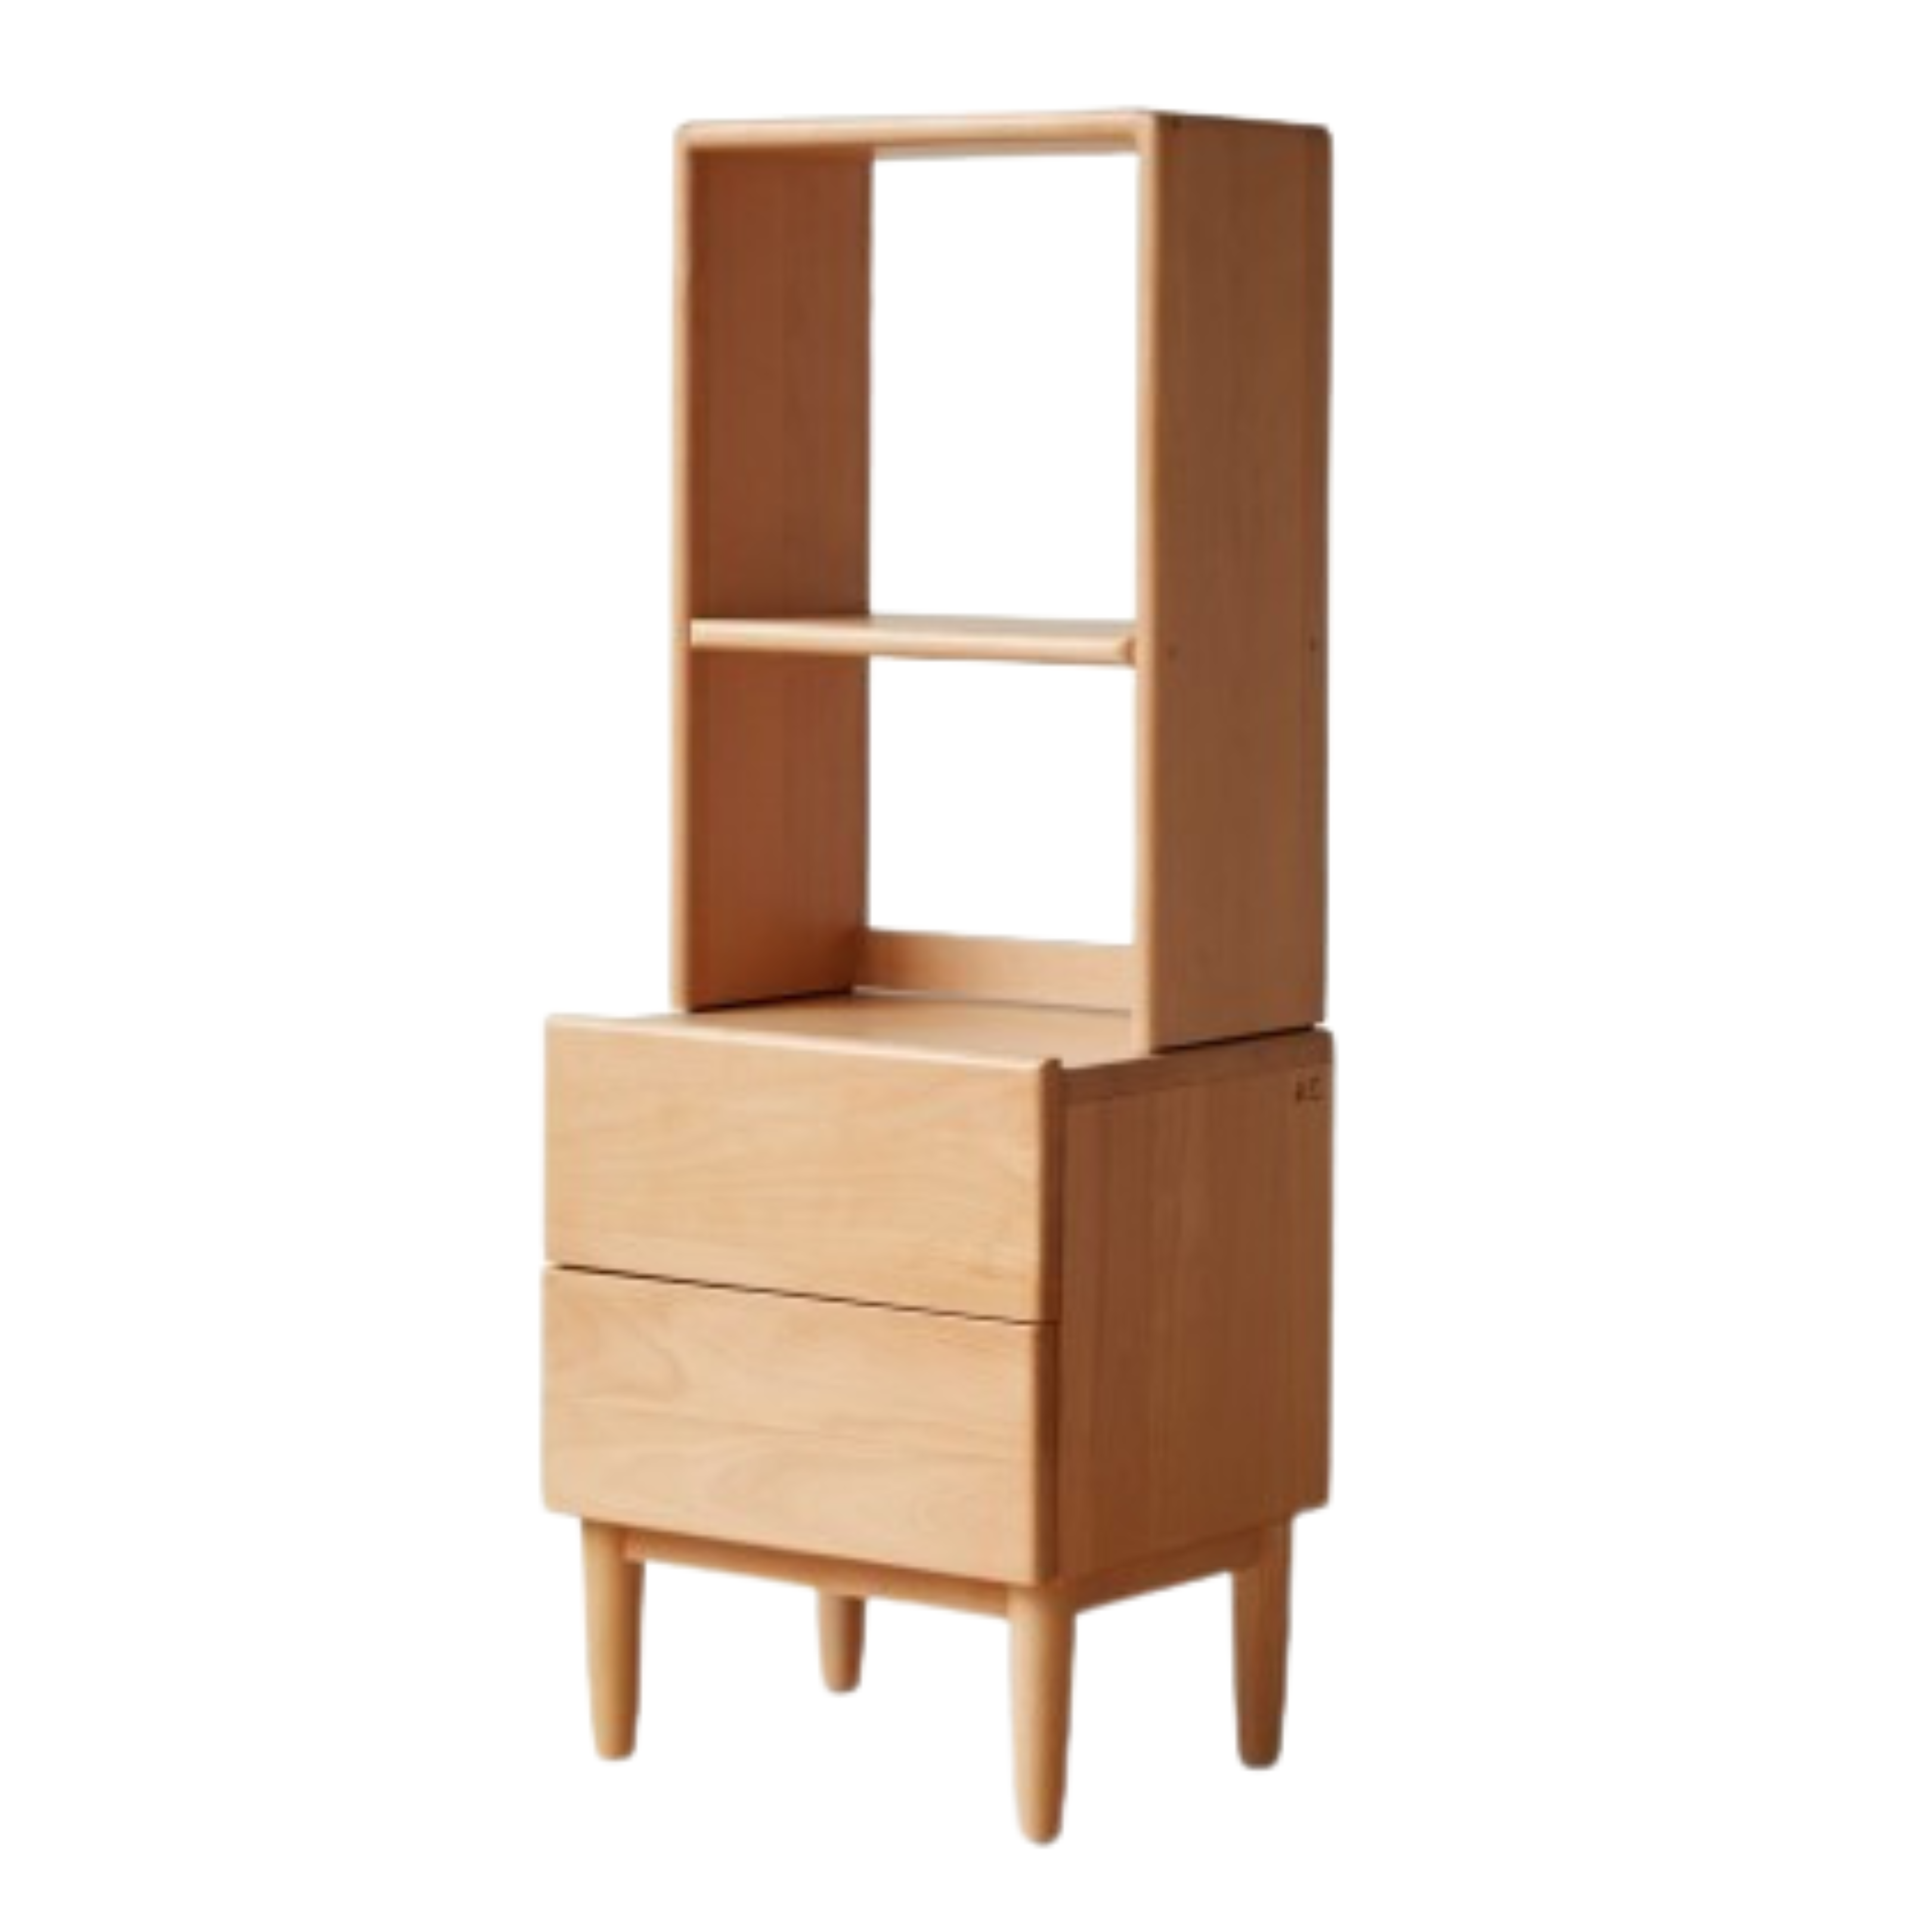 Beech solid wood bedside table and elevated storage rack, bedside bookshelf-